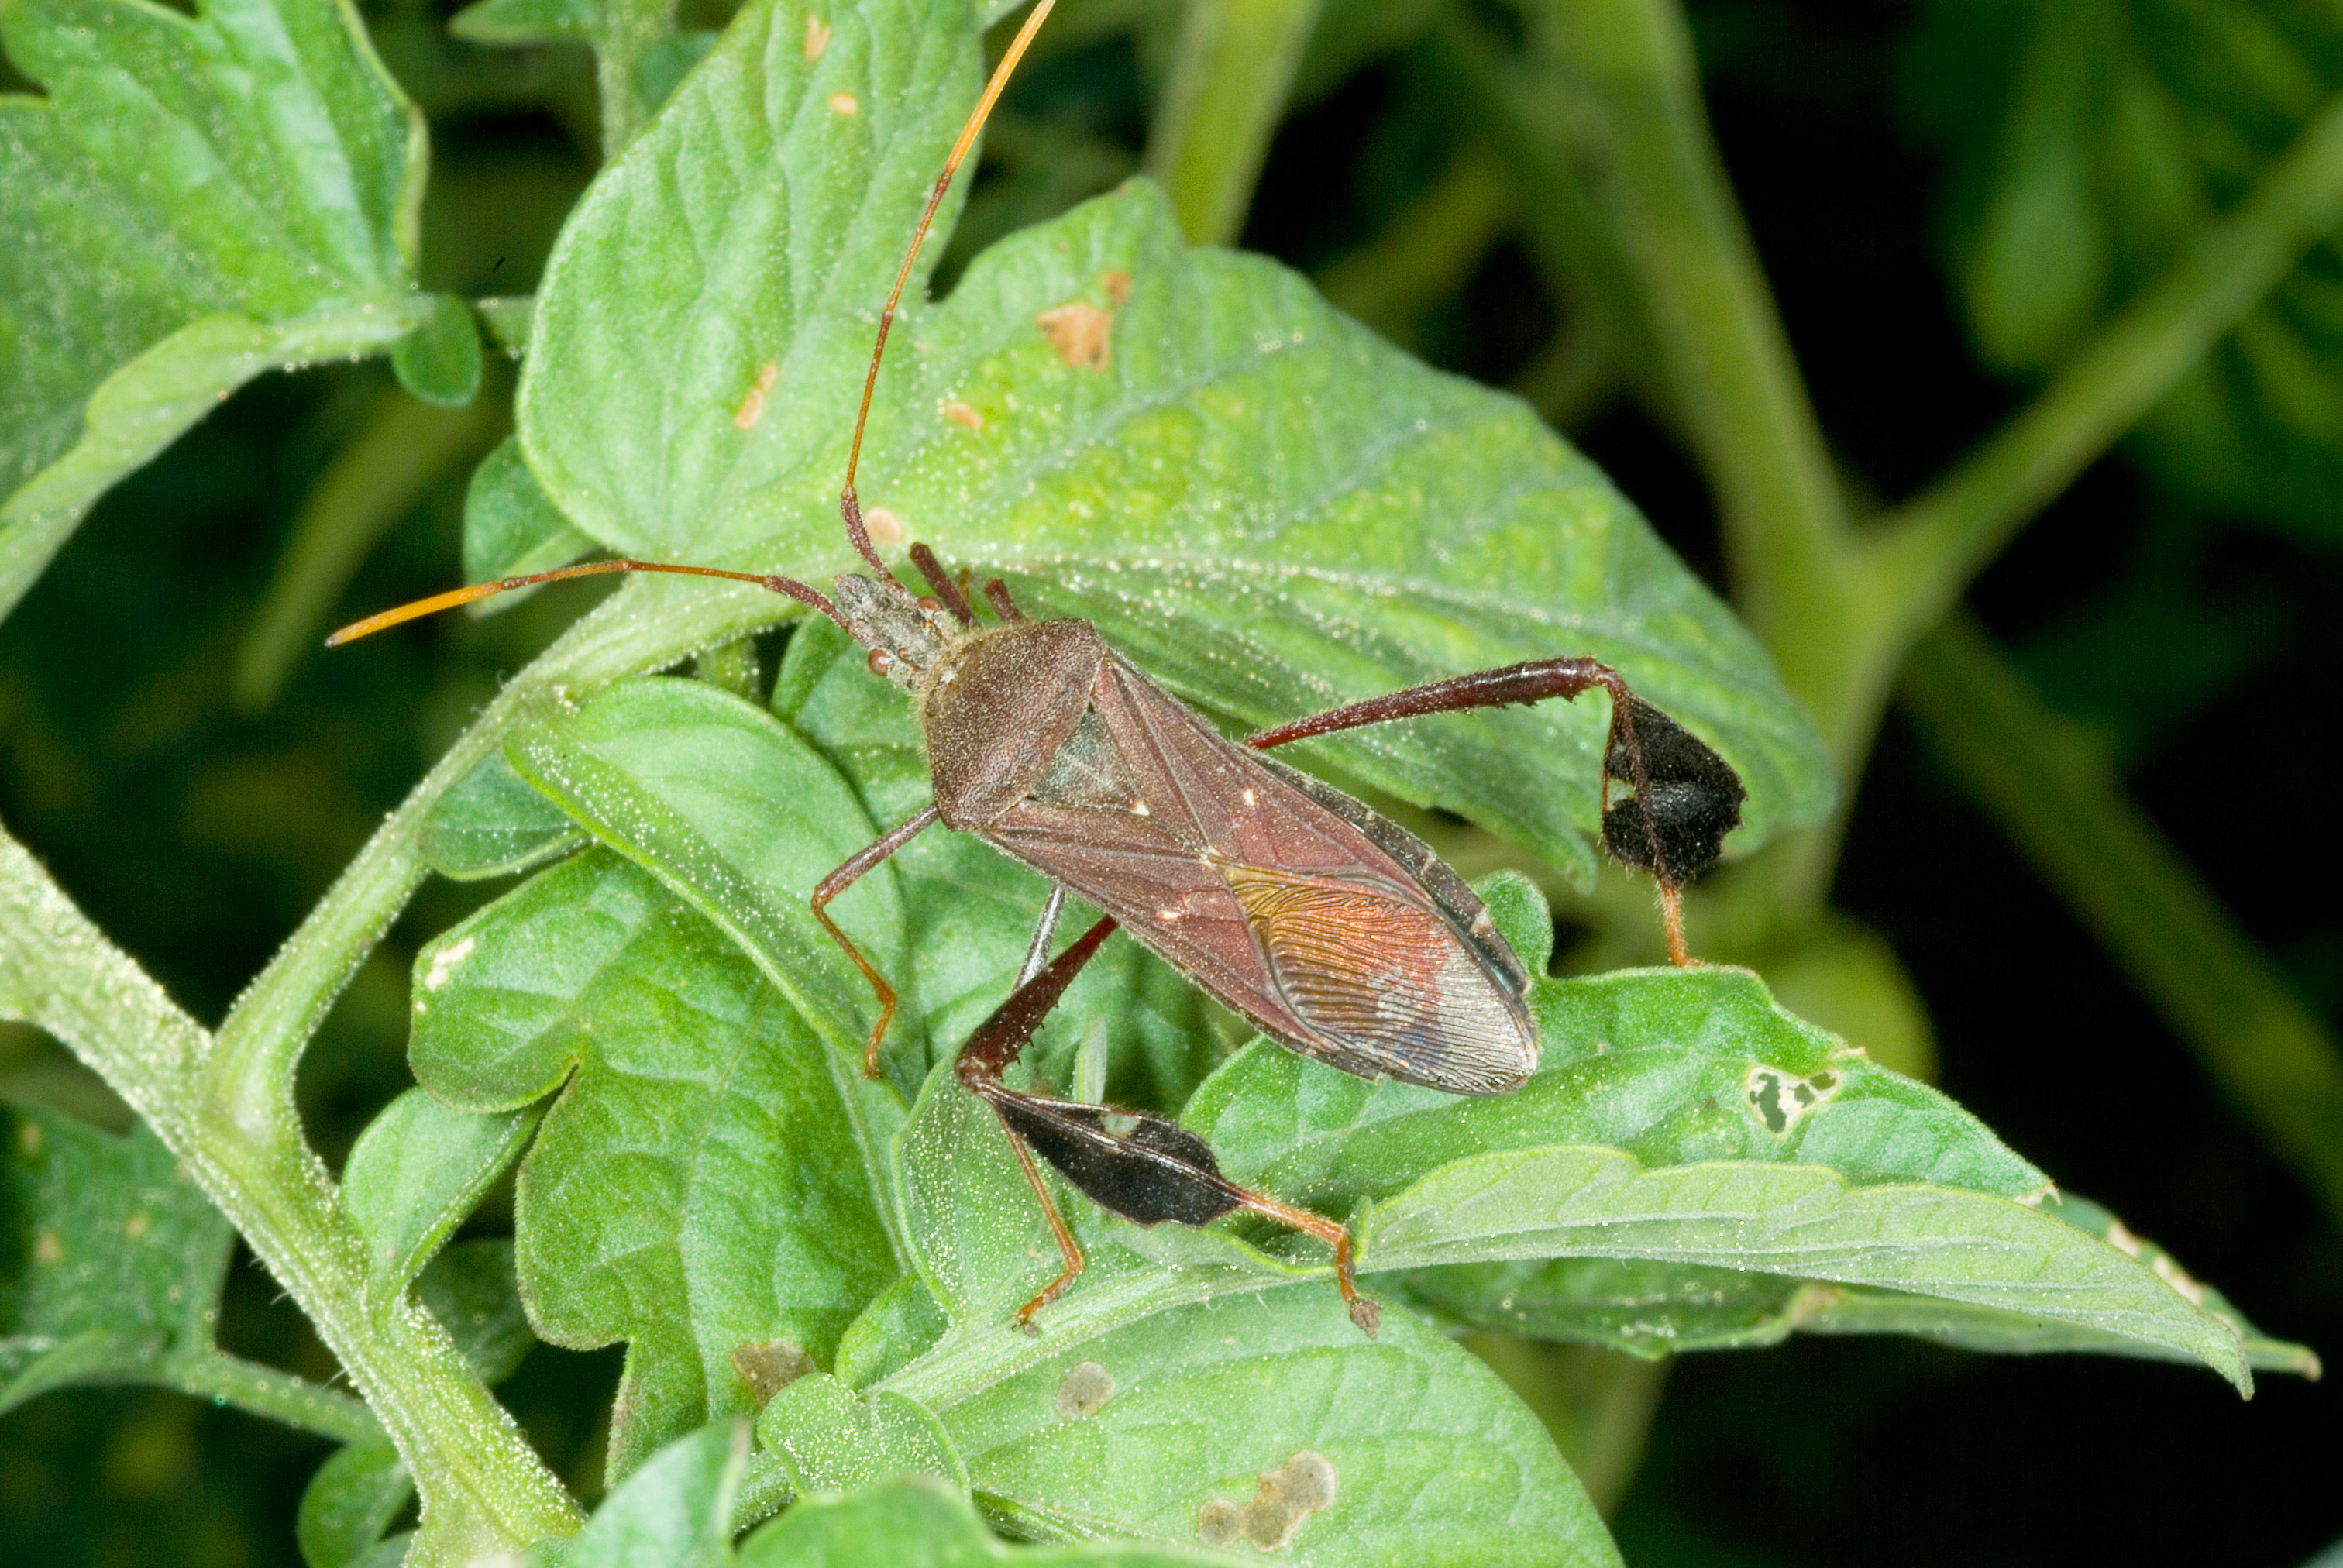 Leaf-footed bugs